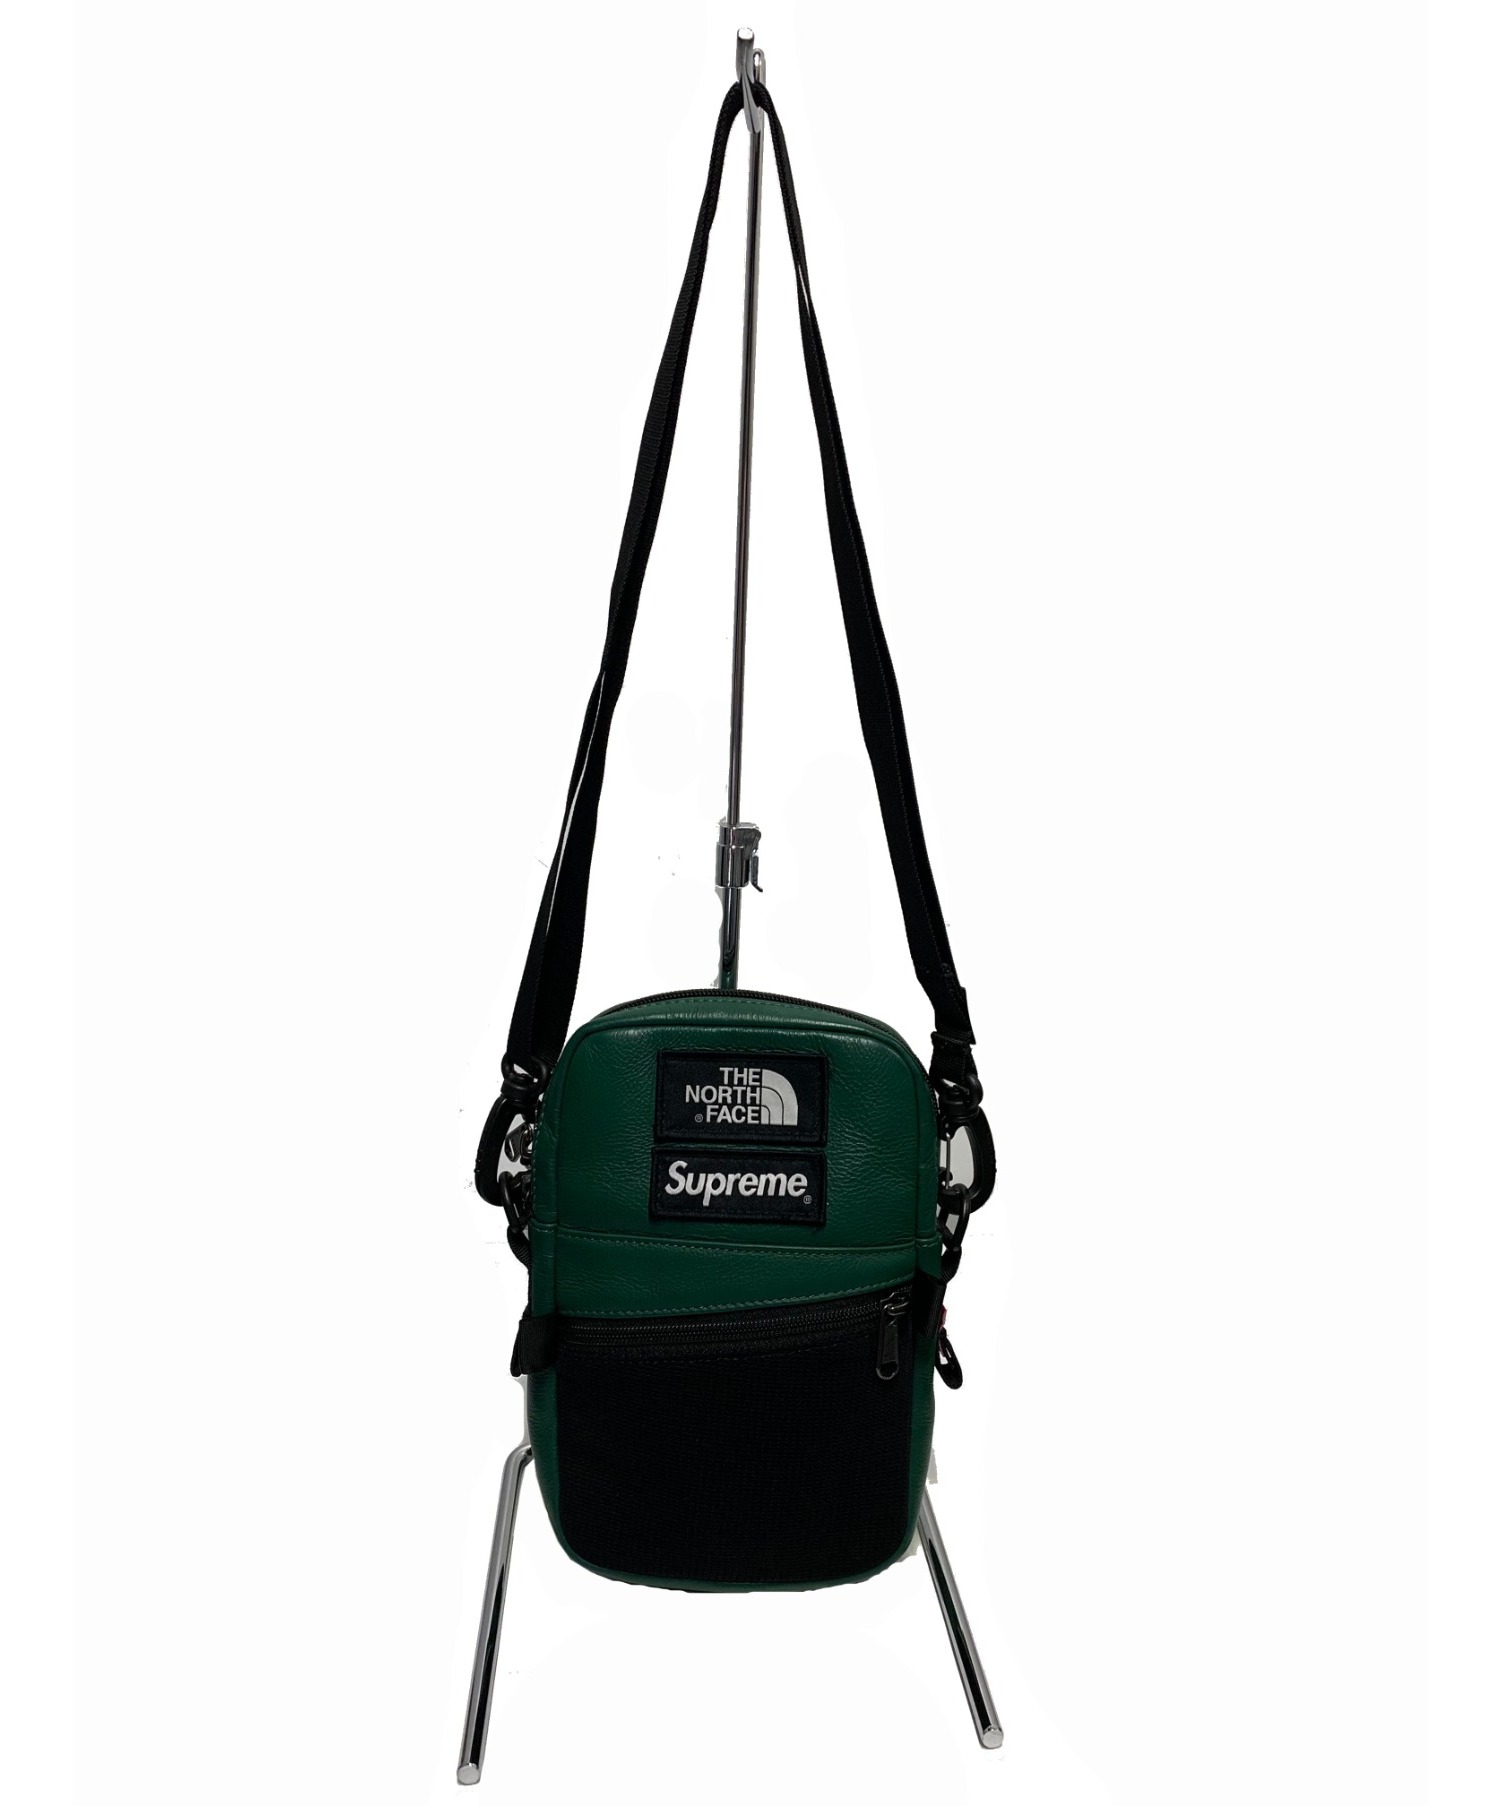 SUPREME×THE NORTH FACE (シュプリーム×ザ・ノースフェイス) レザーショルダーバッグ グリーン NF0A3KYS 18AW  Leather Shoulder Bag